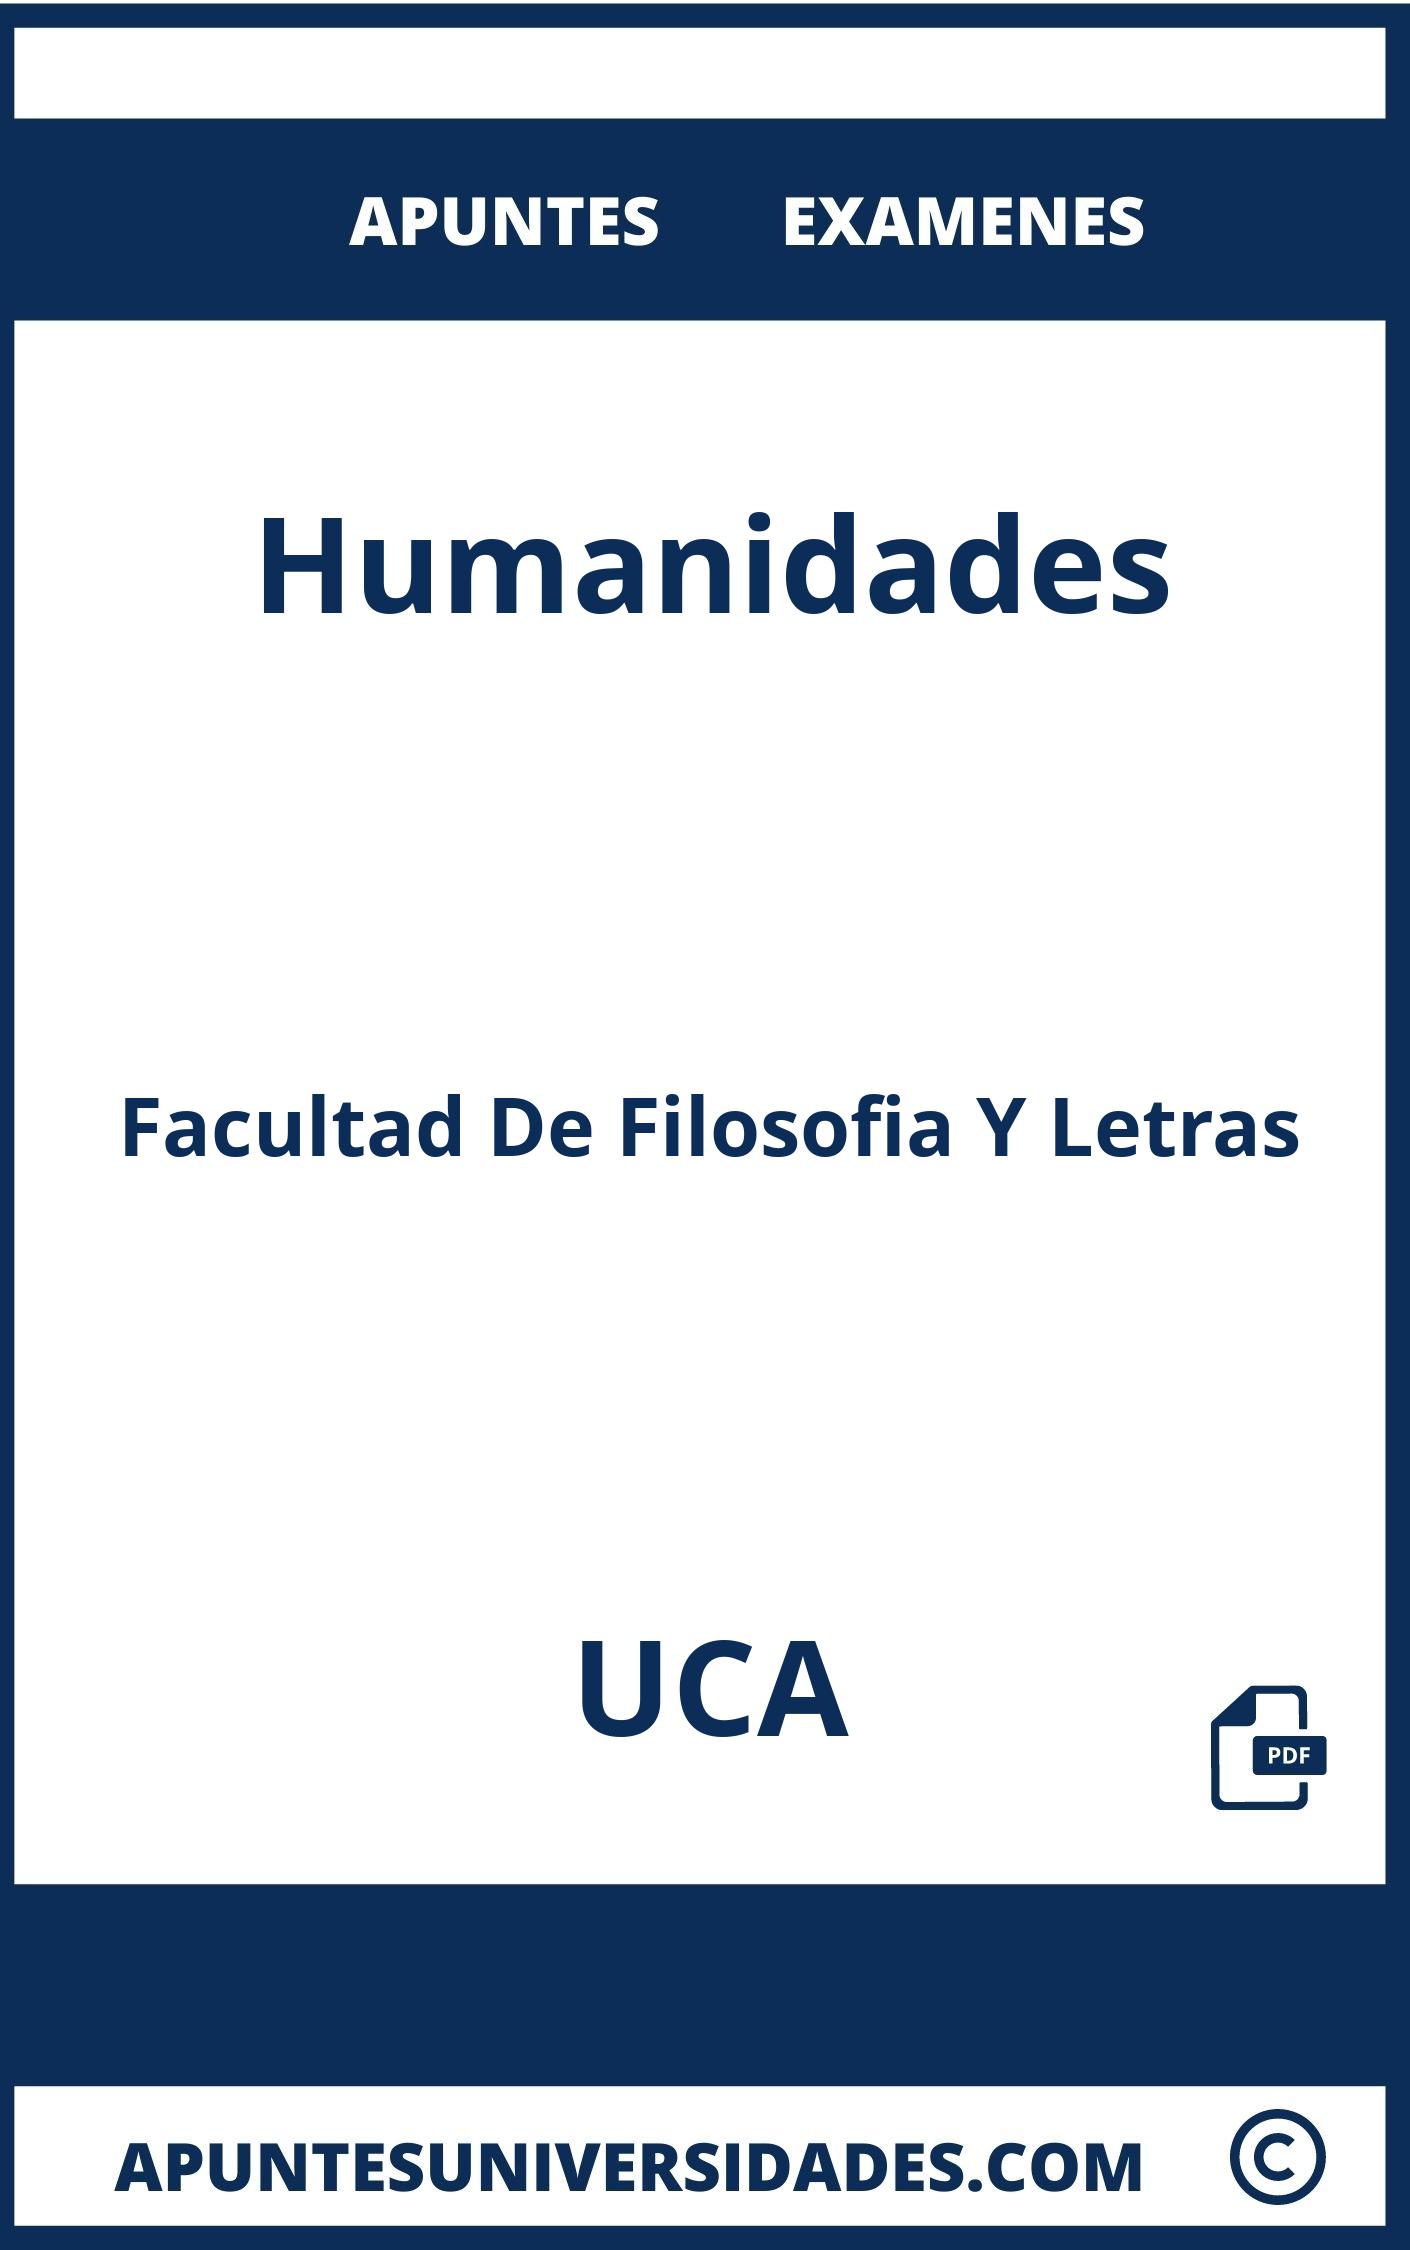 Apuntes Examenes Humanidades UCA